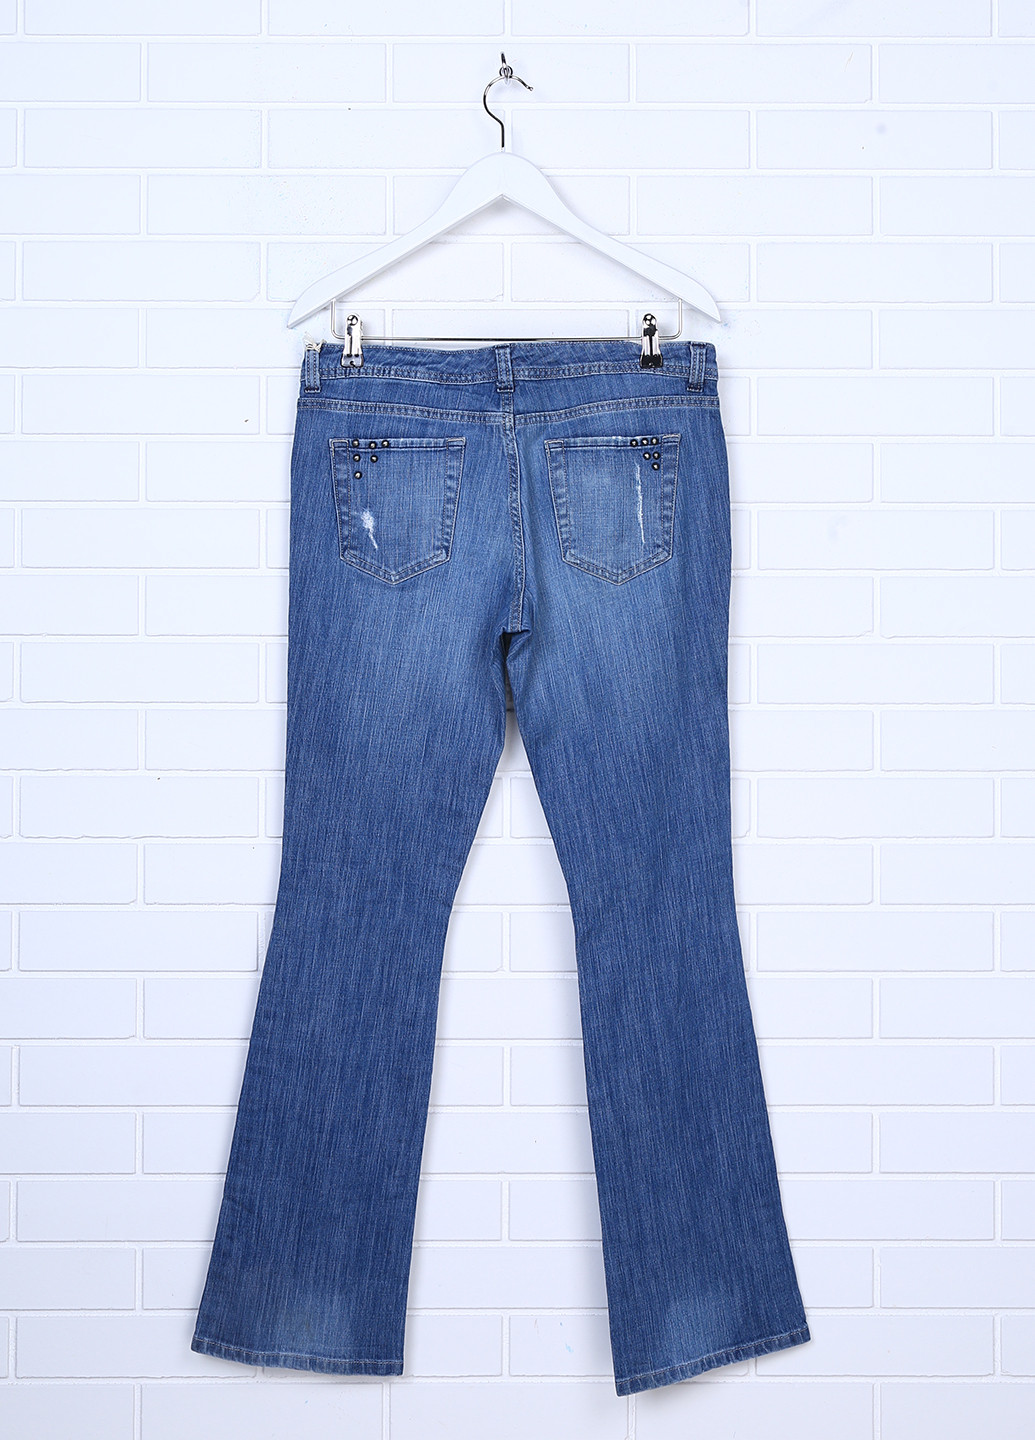 Темно-голубые демисезонные клеш джинсы Mossimo Supply Co